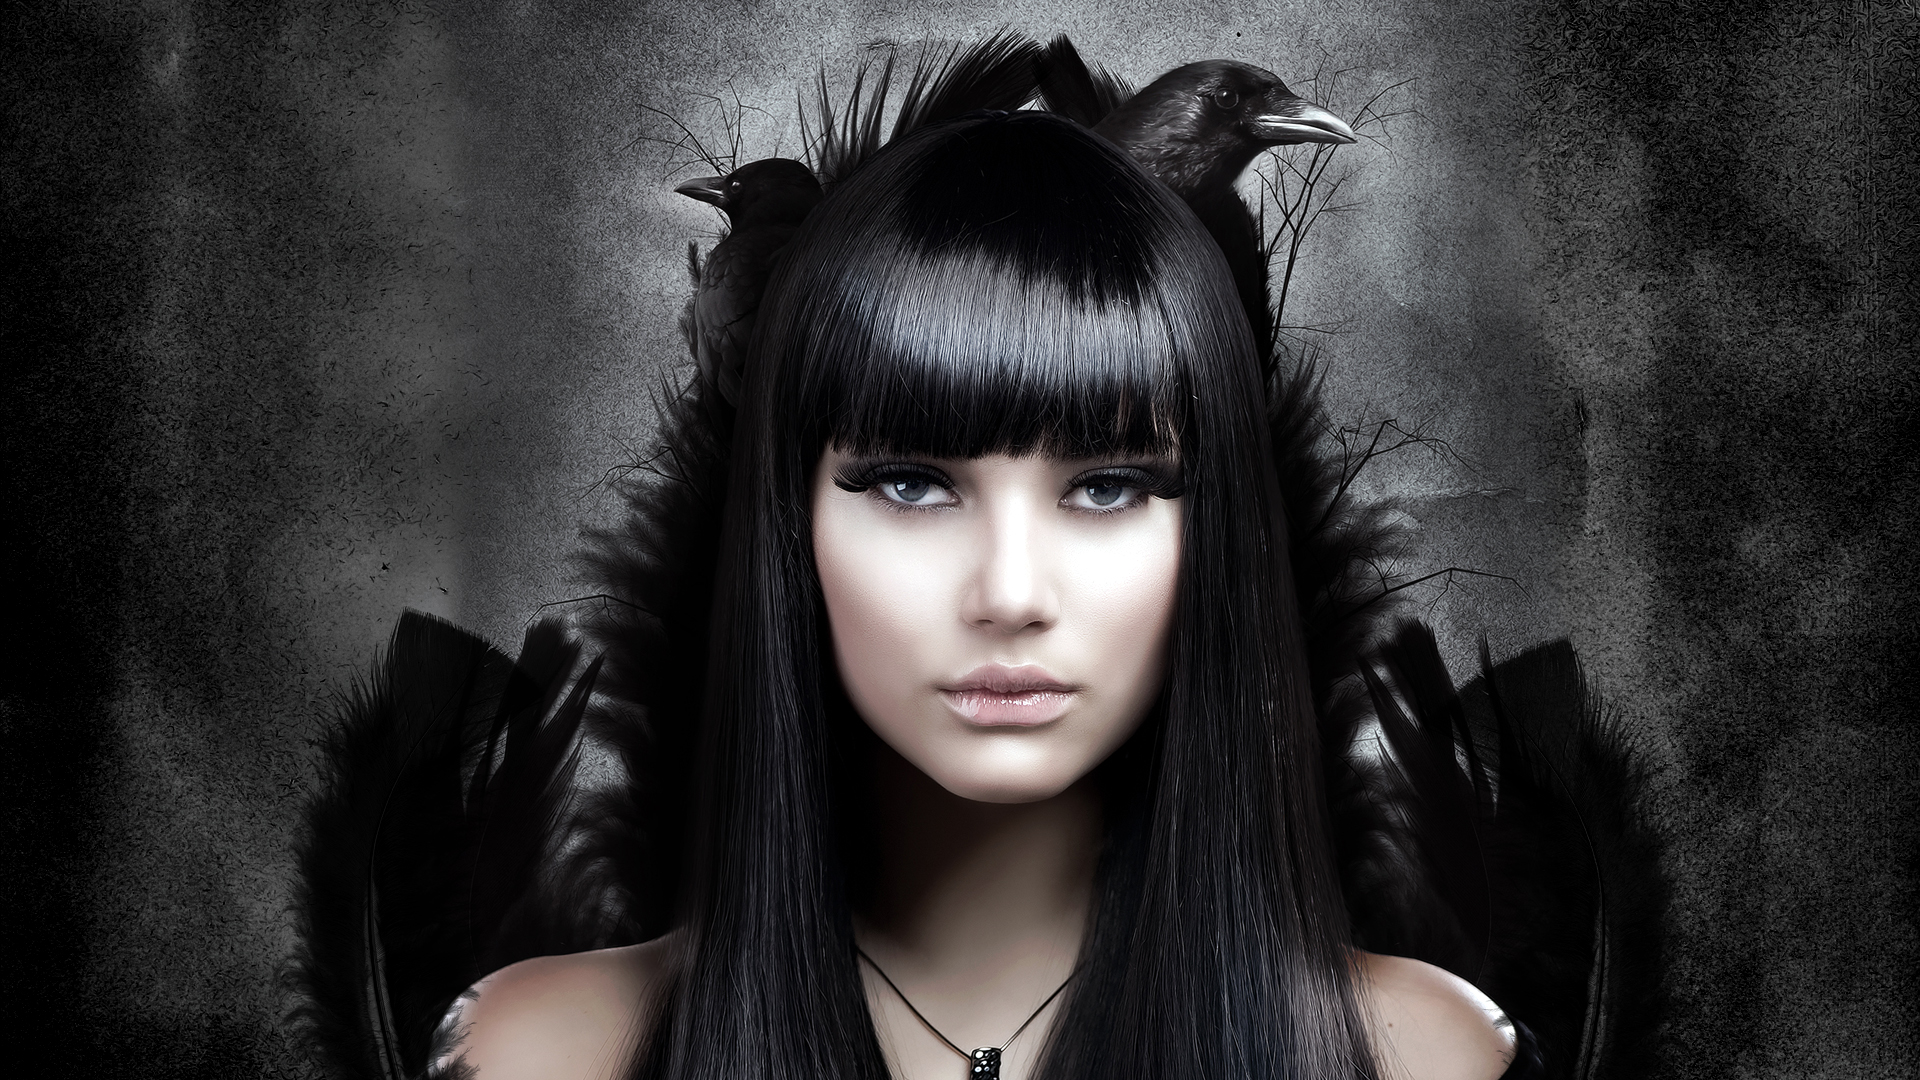 Dark Gothic Poe Vampire Raven Crow Birds Women Females Girls Mood Face